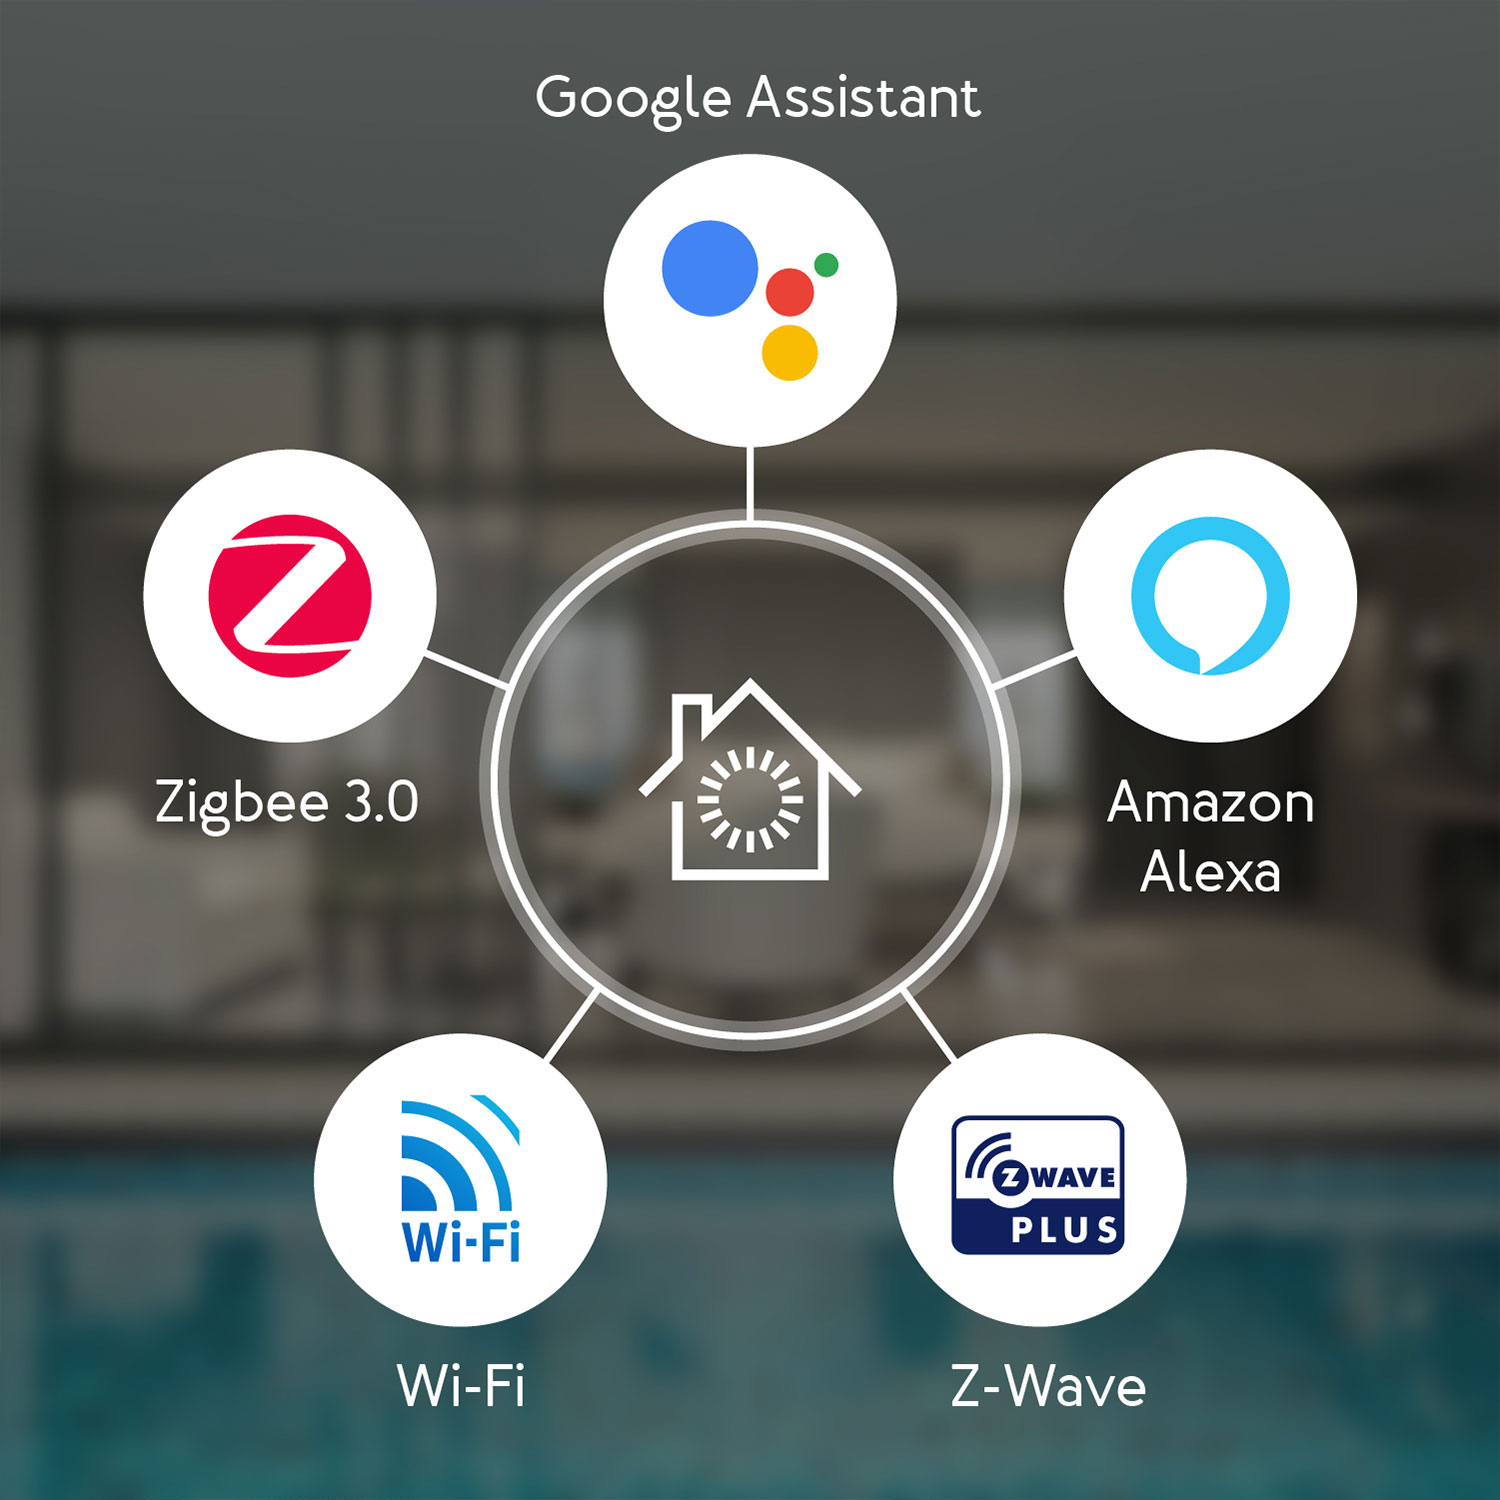 AEOTEC SMARTTHINGS Smart Home Plus, Zigbee, Weiß Alexa, Home Hub Smart Google SmartThings Assistant, Hub, Hub as Amazon Works | WLAN Z-Wave, Z-Wave